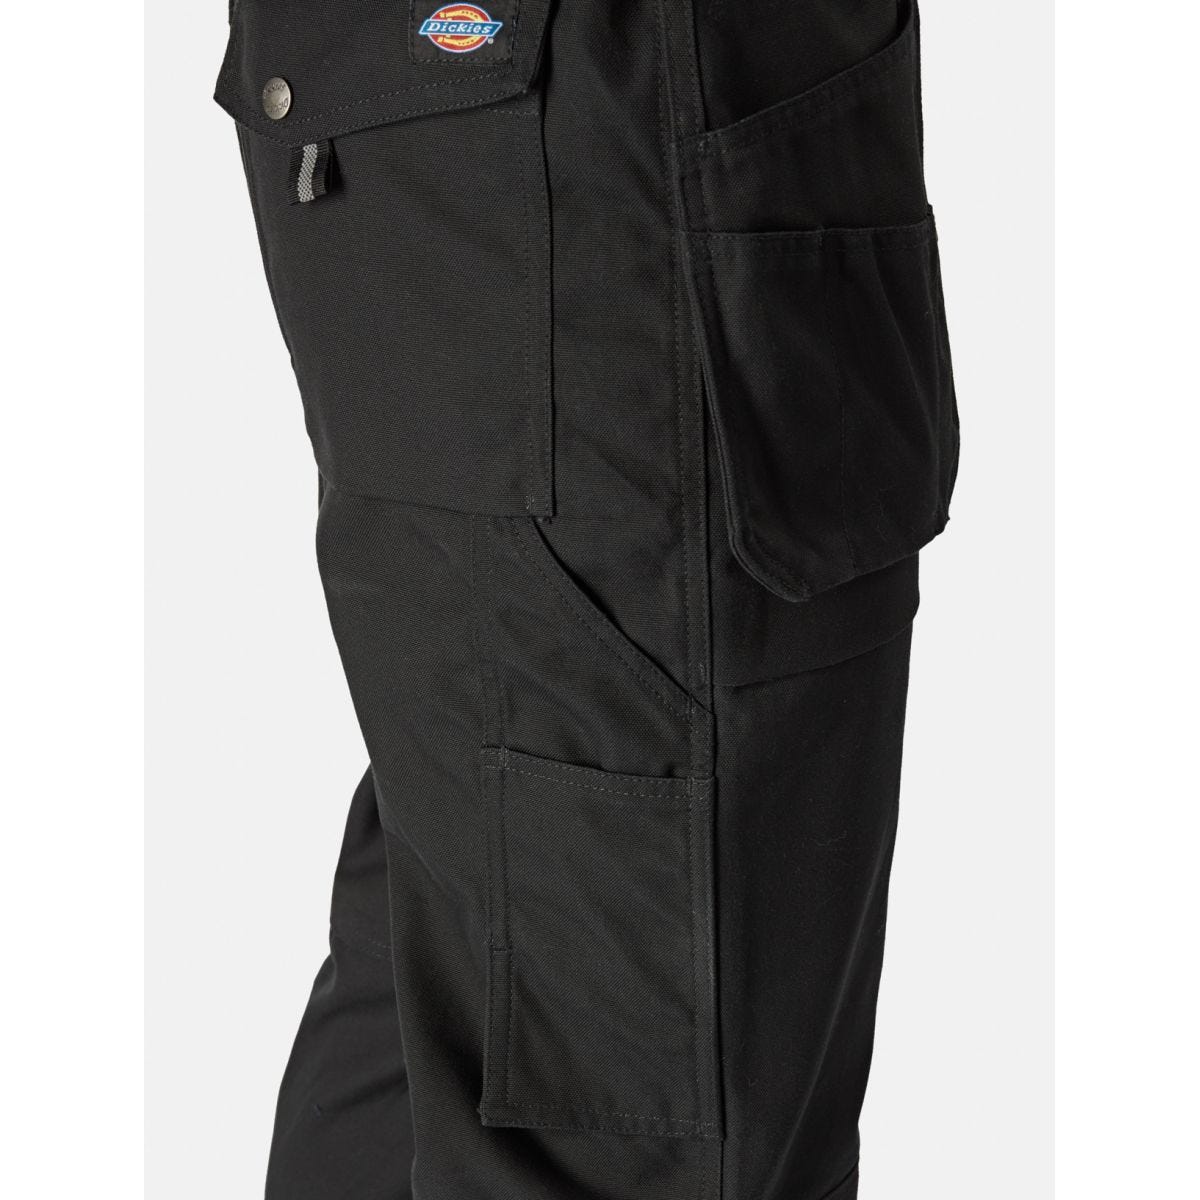 Pantalon Eisenhower multi-poches Noir - Dickies - Taille 46 4